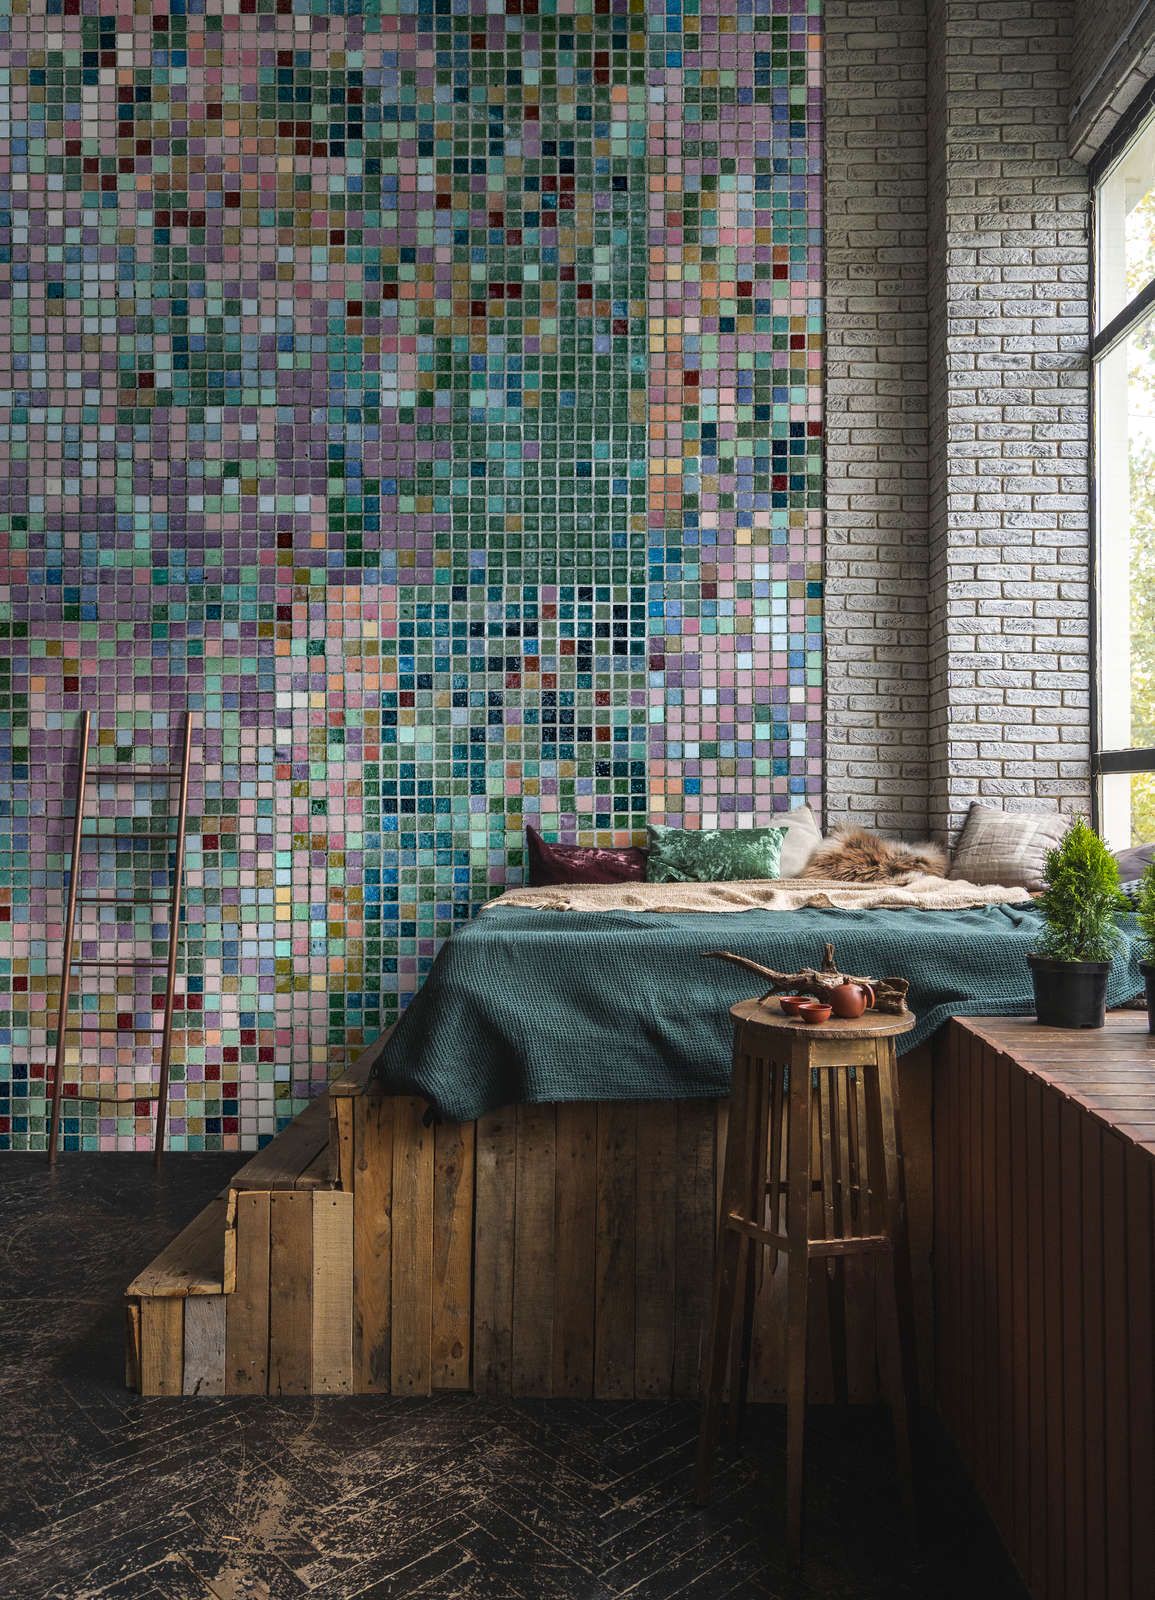             Photo wallpaper »grand central« - Mosaic pattern in bright colours - Matt, smooth non-woven fabric
        